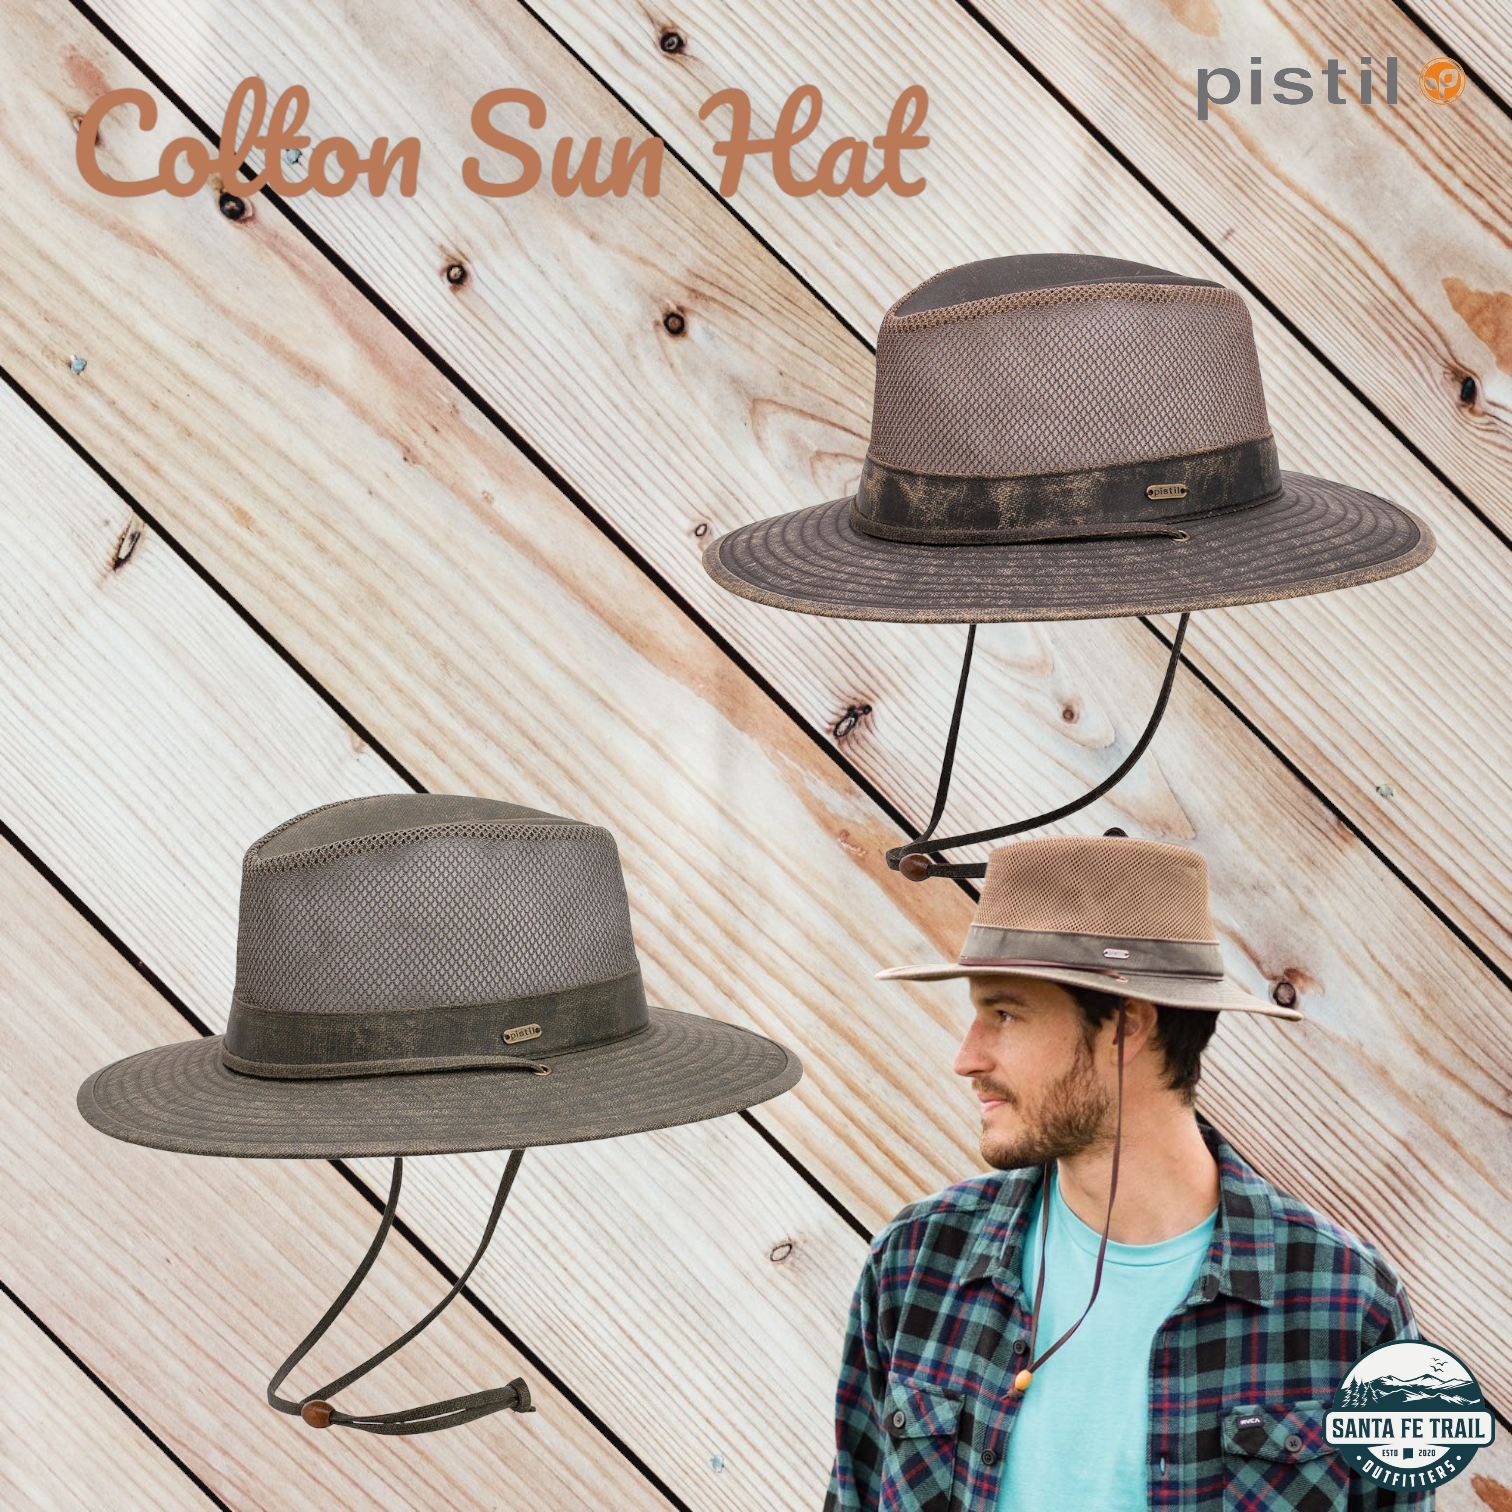 Colton Sun Hat by Pistil Designs